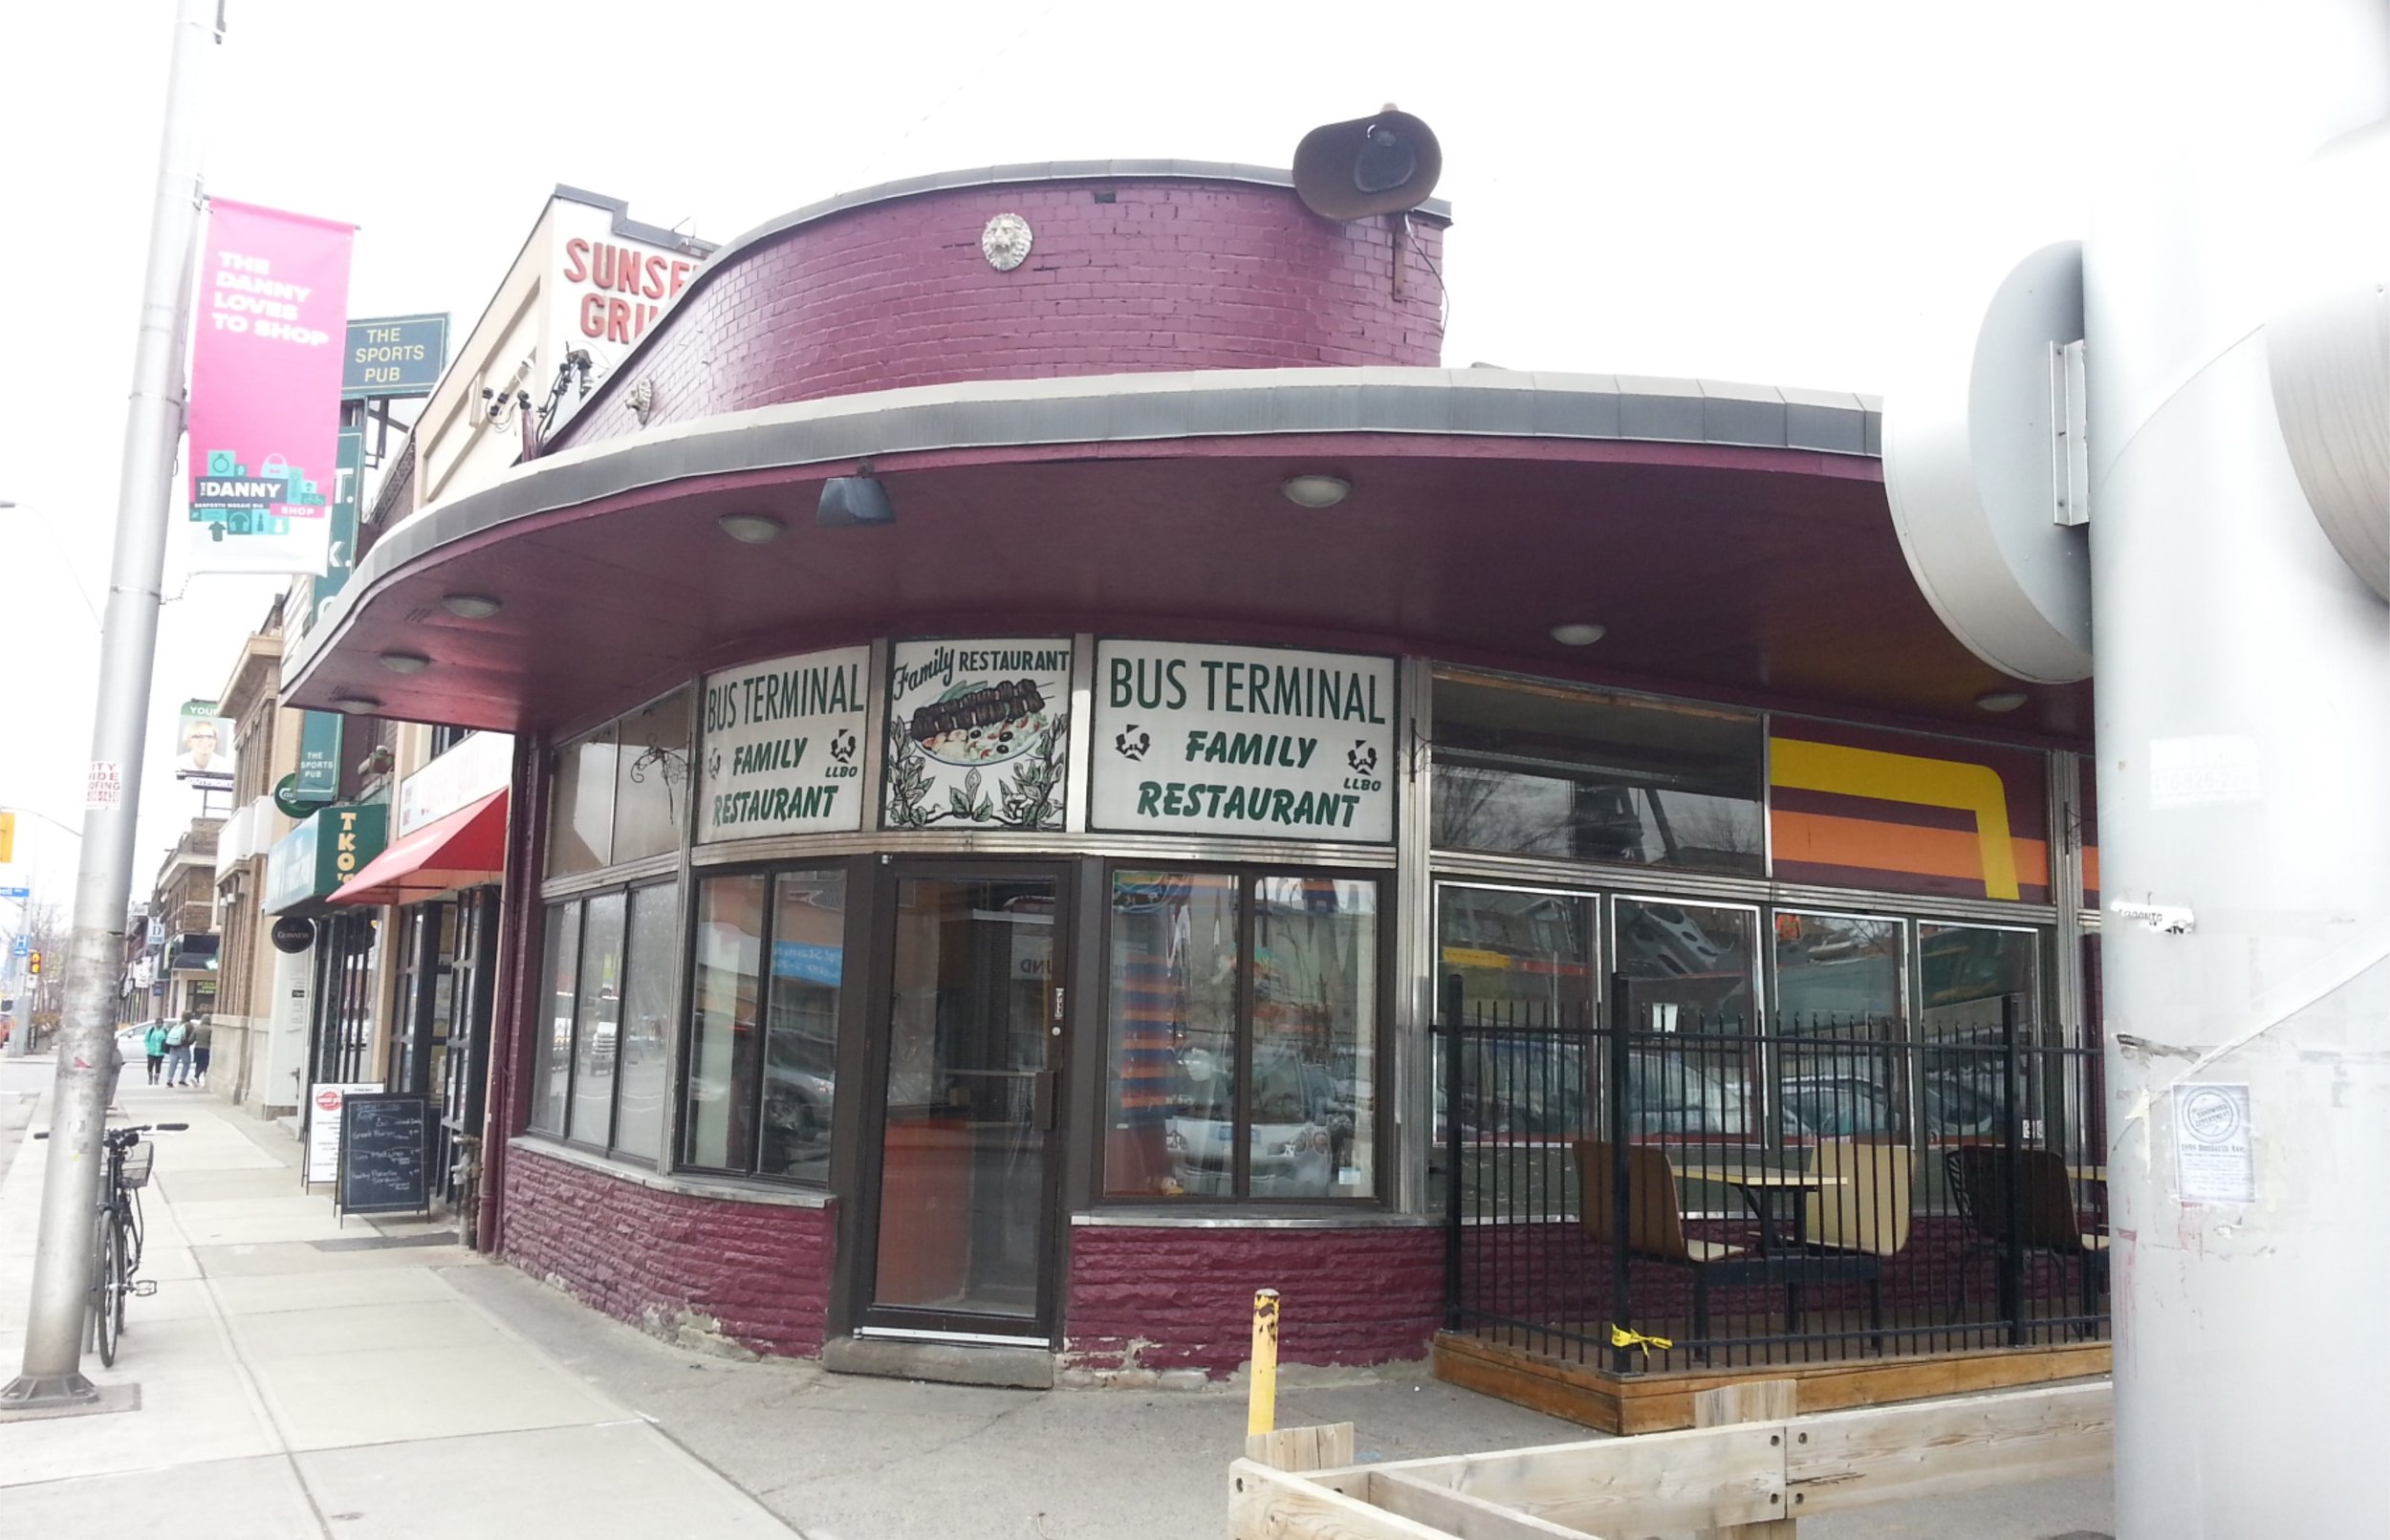 Toronto quietly loses landmark bus terminal diner - BlogTO